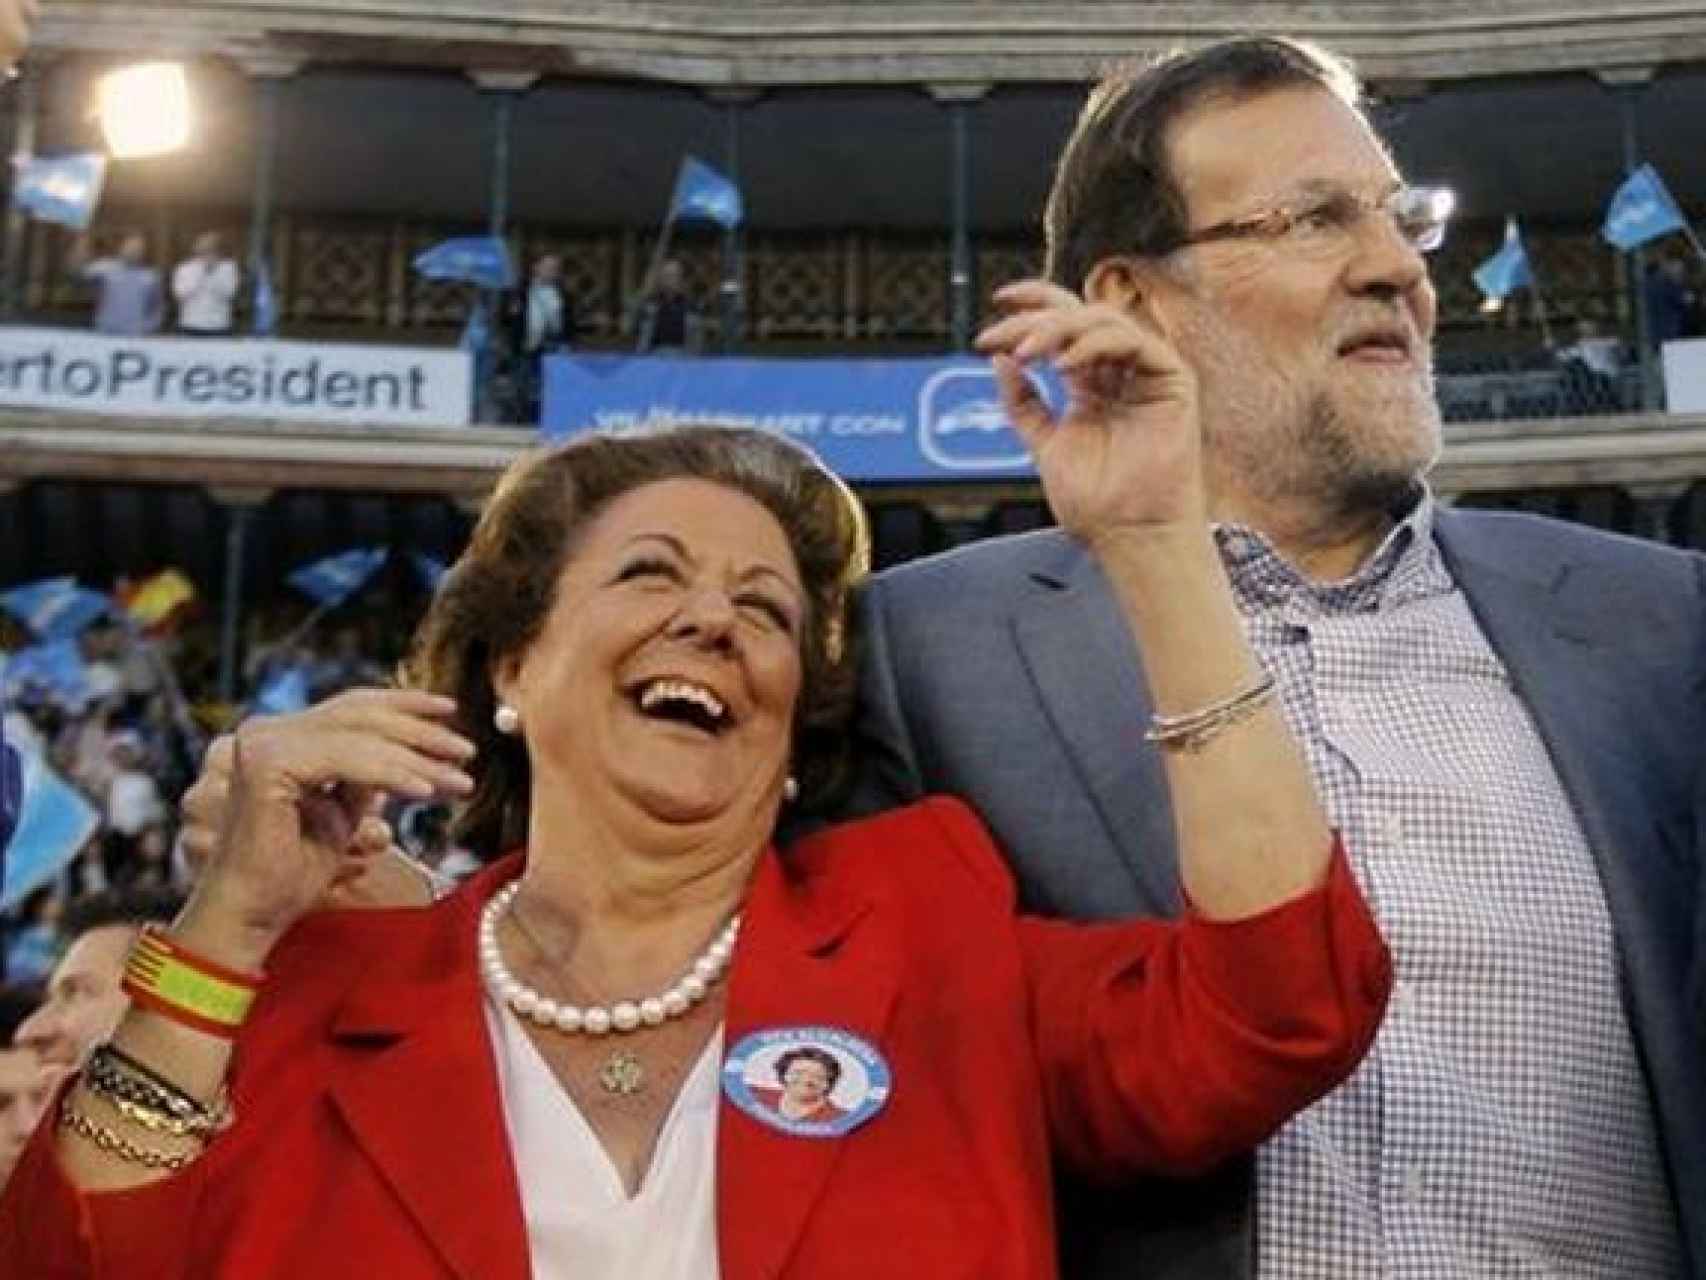 La exalcaldesa de Valencia, Rita Barberá, junto a Mariano Rajoy en un mitin